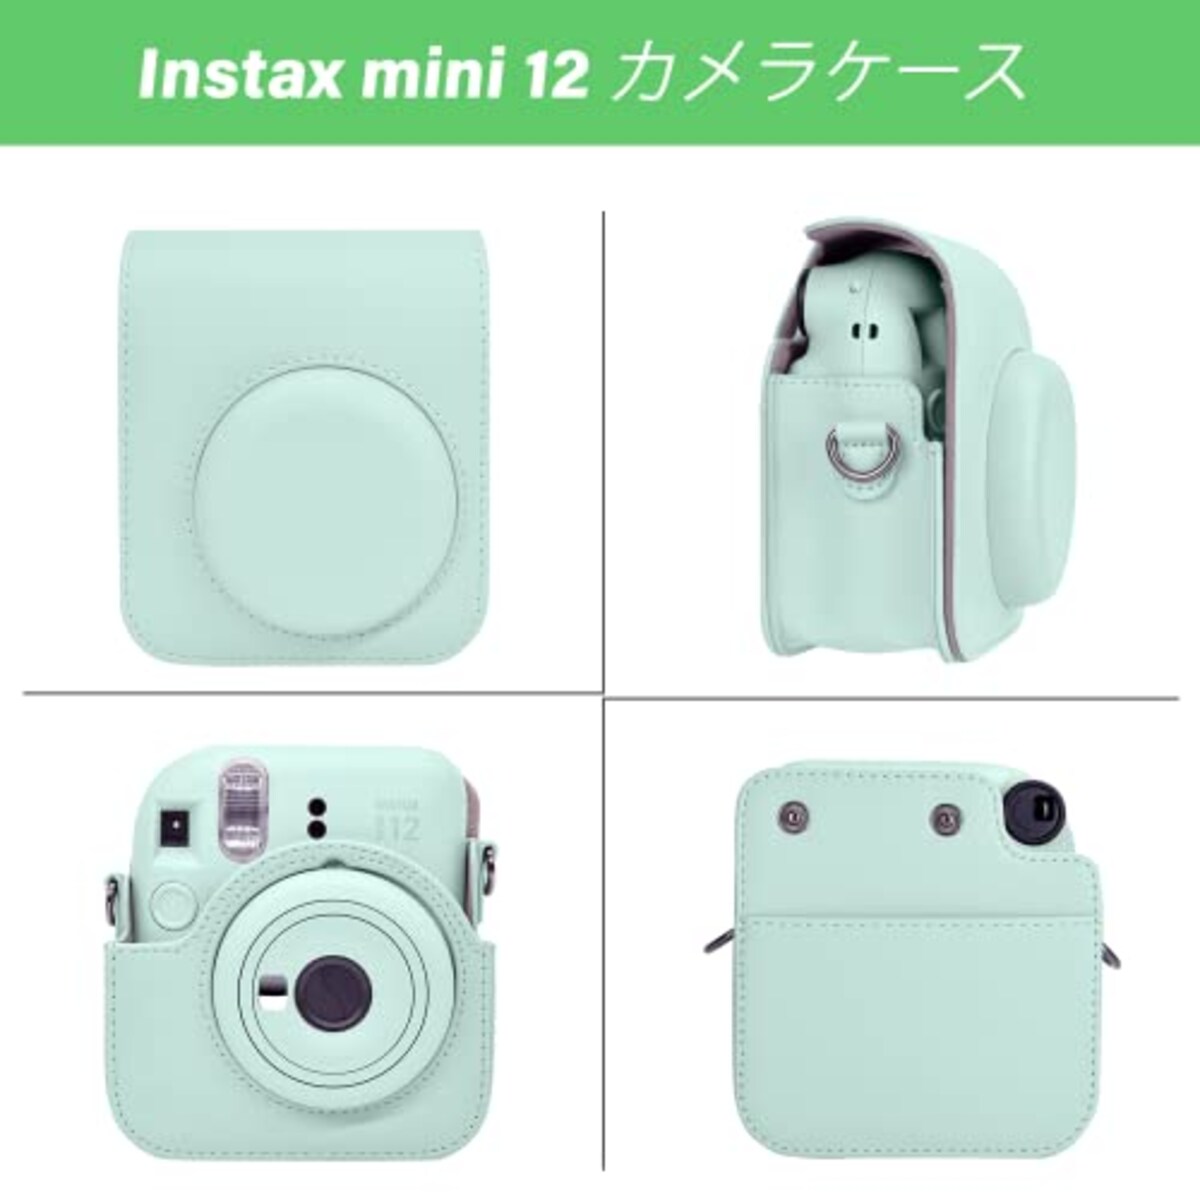  HIYQIN チェキケース instax mini 12ケース,Fujifilm チェキ12ケース と28枚写真入れアルバム付き２点セット チェキ mini 12カメラケース ショルダーストラップ付き PUレザー - グリーン画像2 